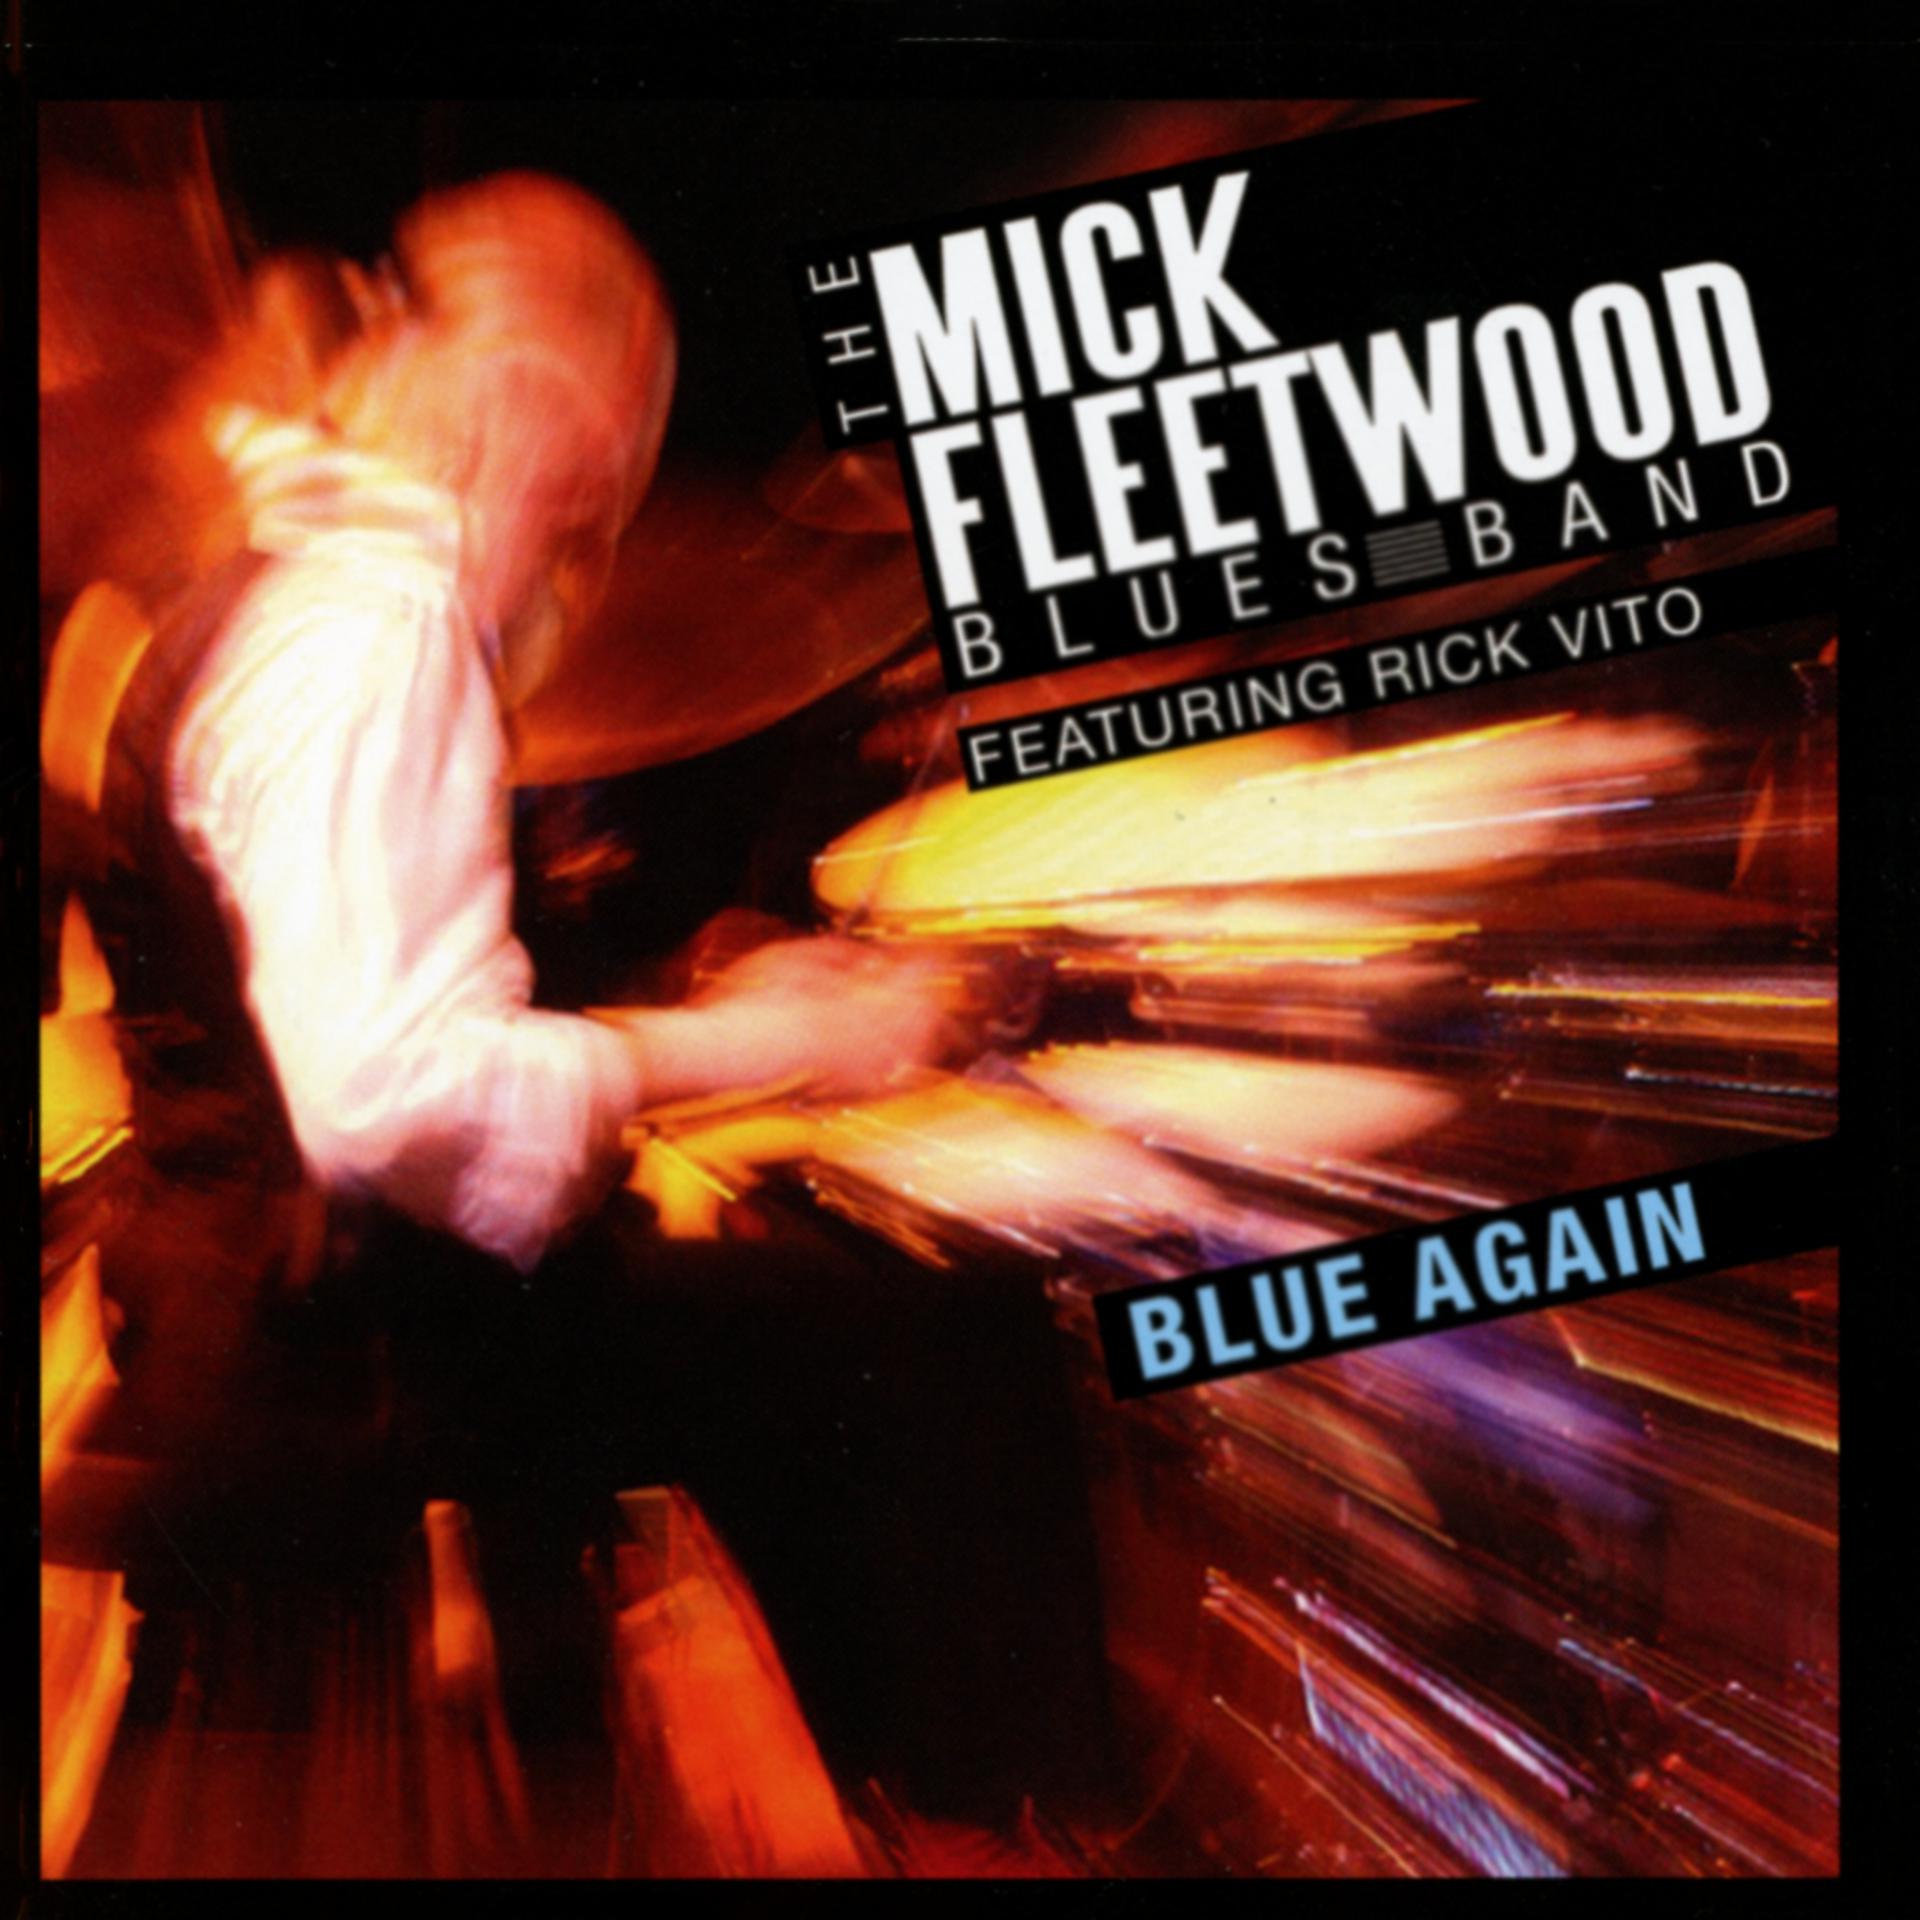 Blue again. Mick Fleetwood Blues Band. Рик Вито. The Mick Fleetwood Blues Band - something big (2002). Rick Vito mp3.